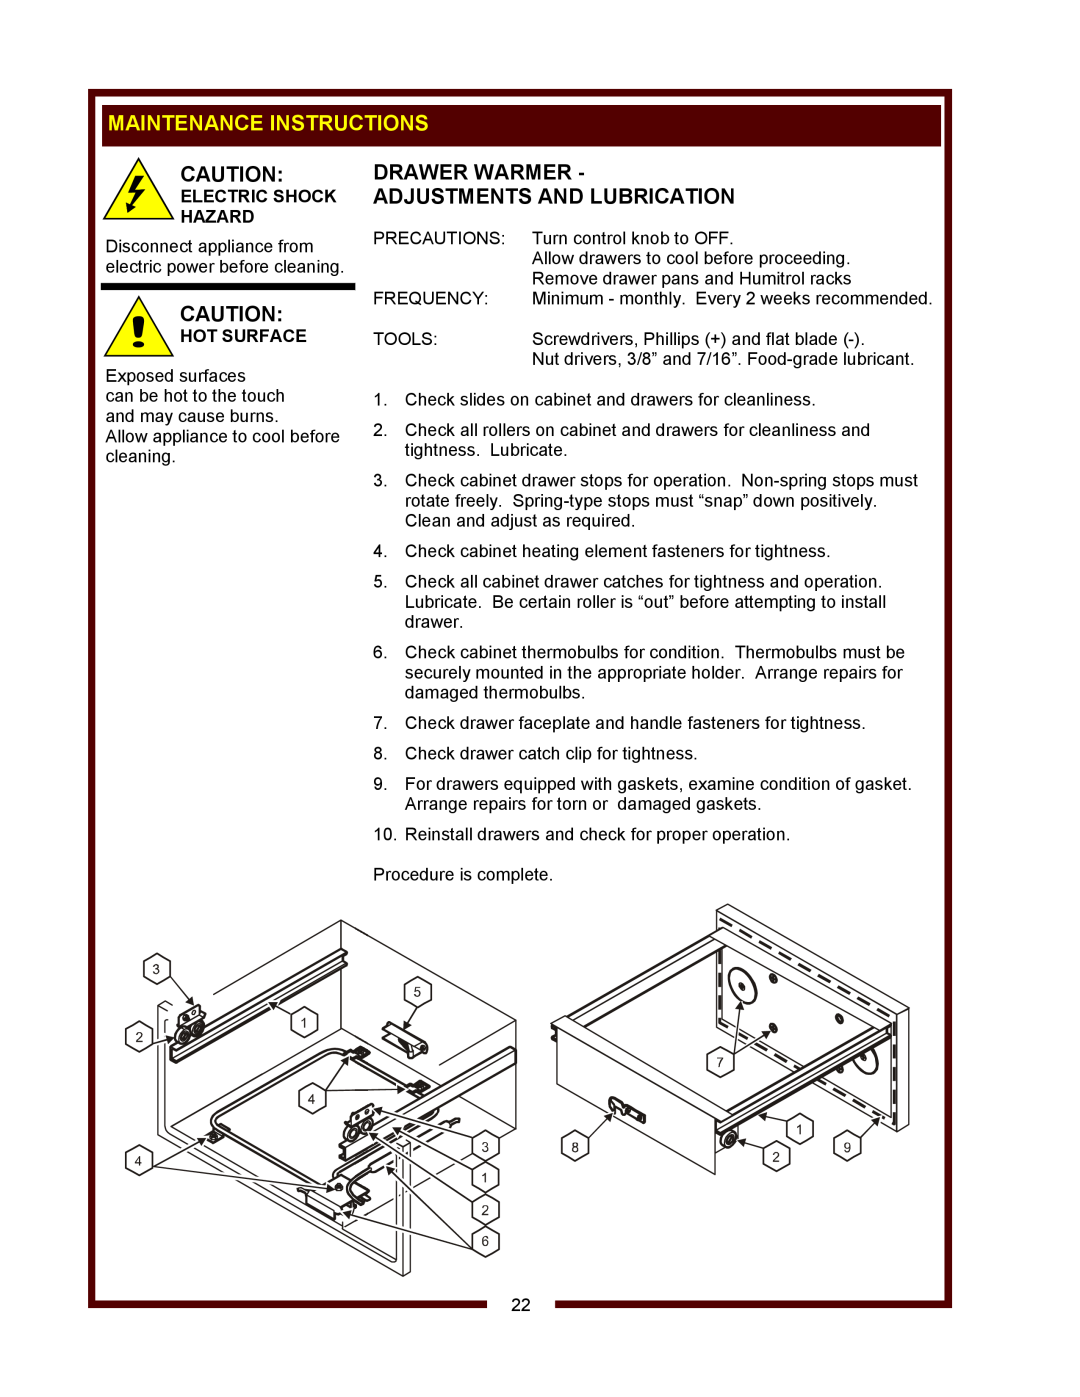 Wells WV-2SHG Maintenance Instructions, Drawer Warmer Adjustments And Lubrication, Electric Shock Hazard, Hot Surface 